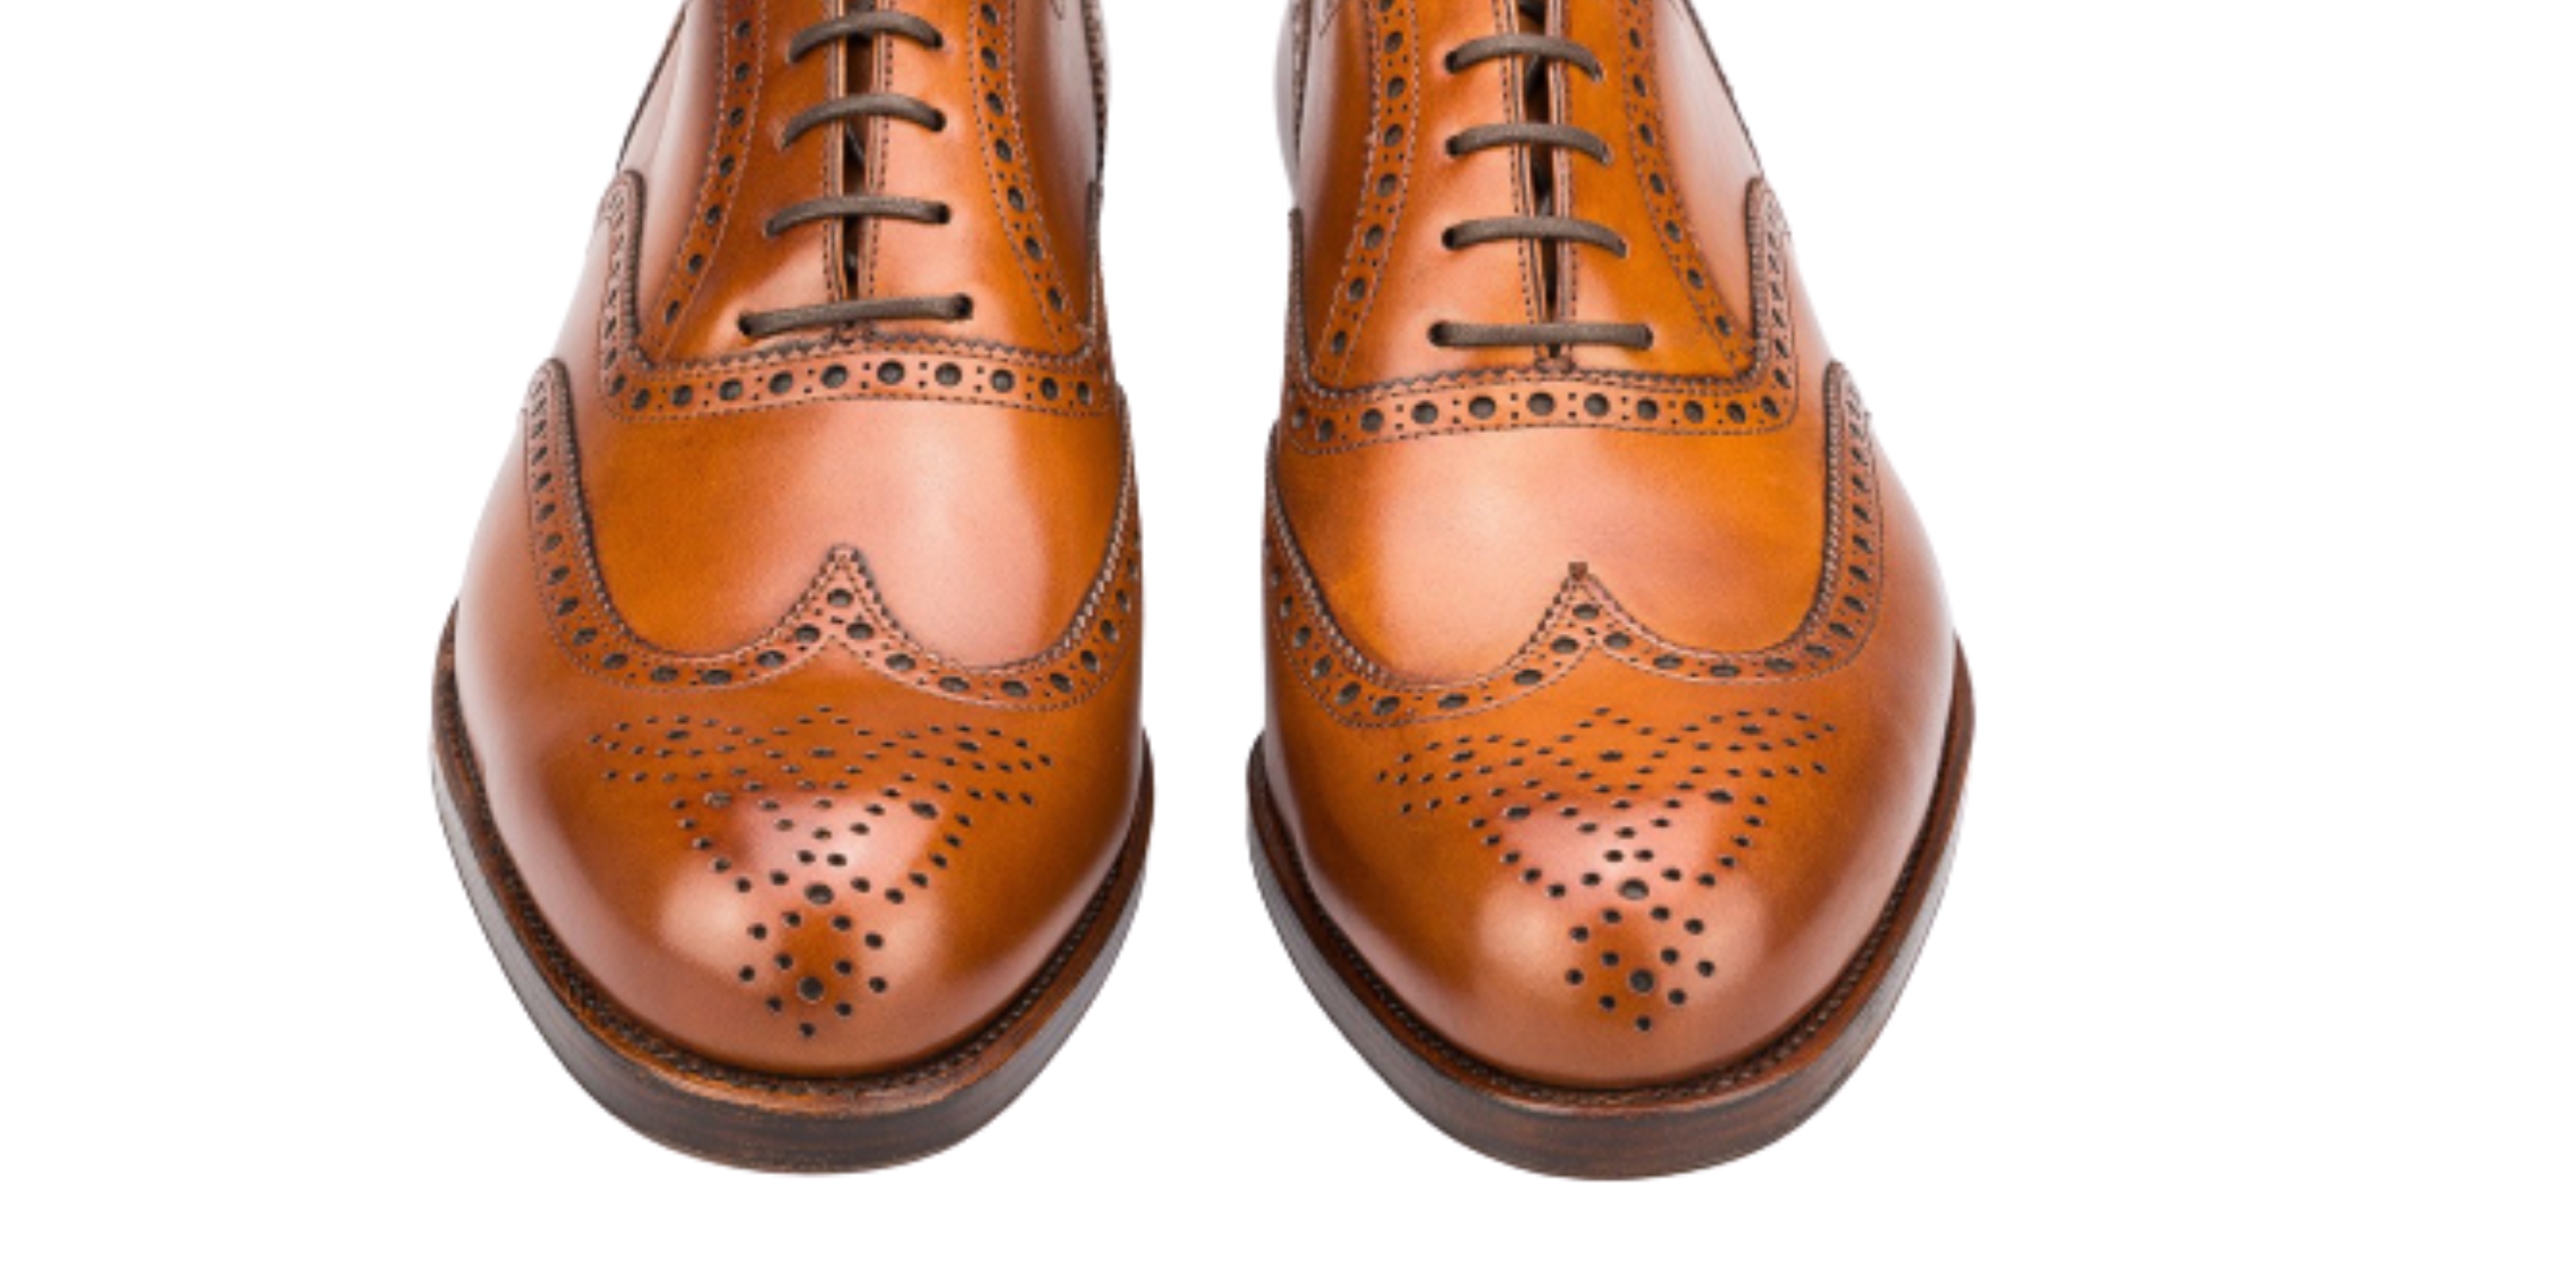 Wingtip — Types of Men's Formal Shoes